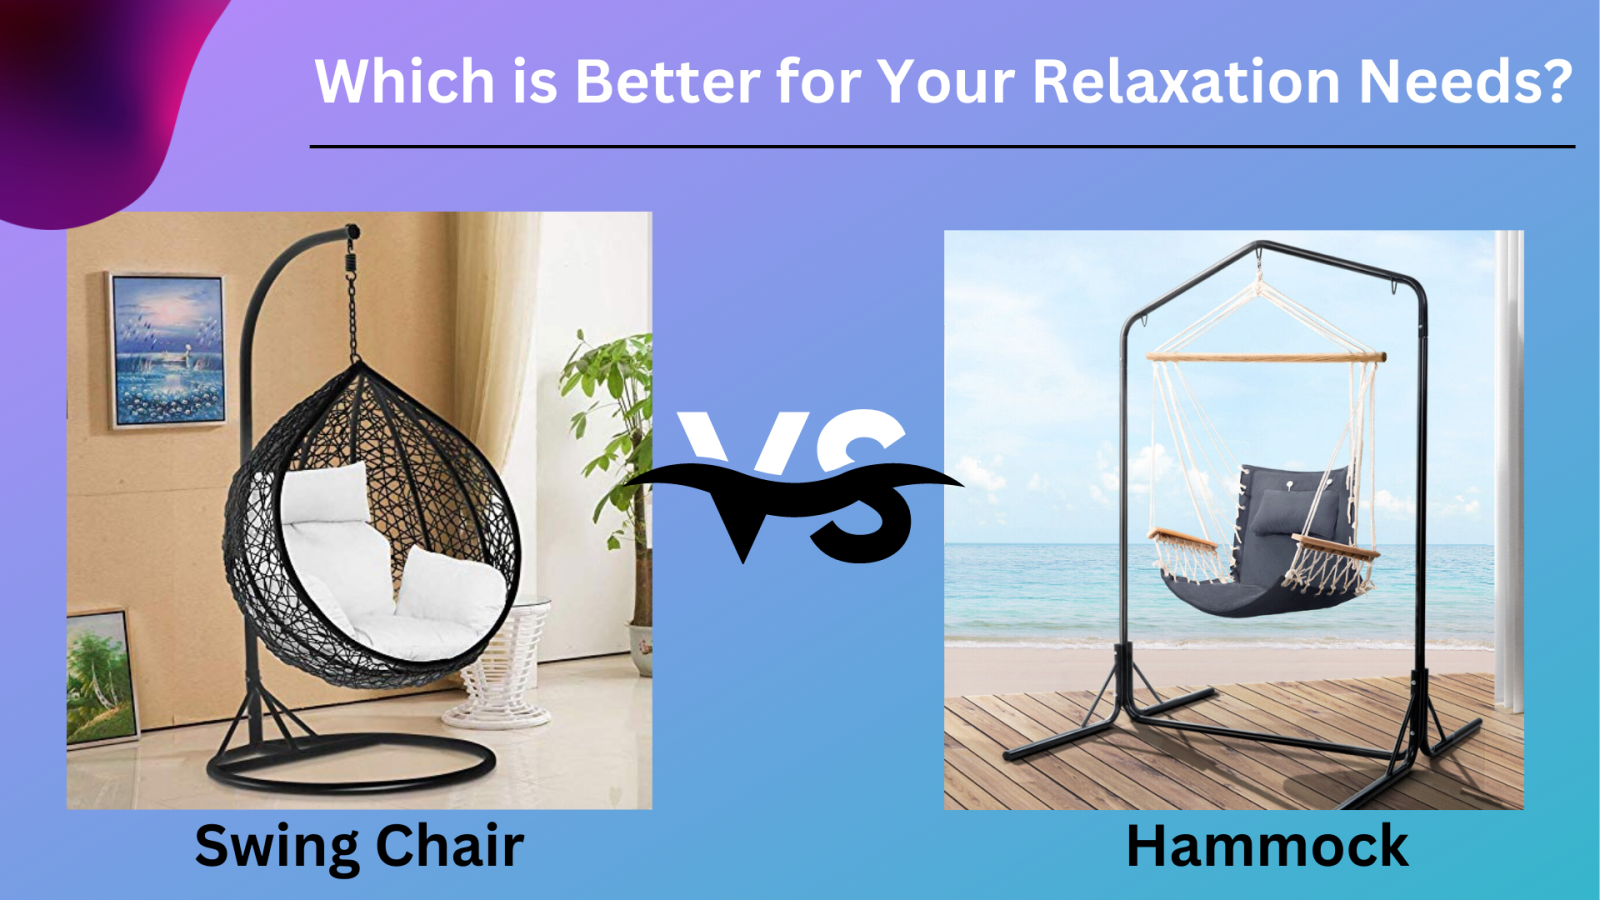 Swing Chair vs Hammock